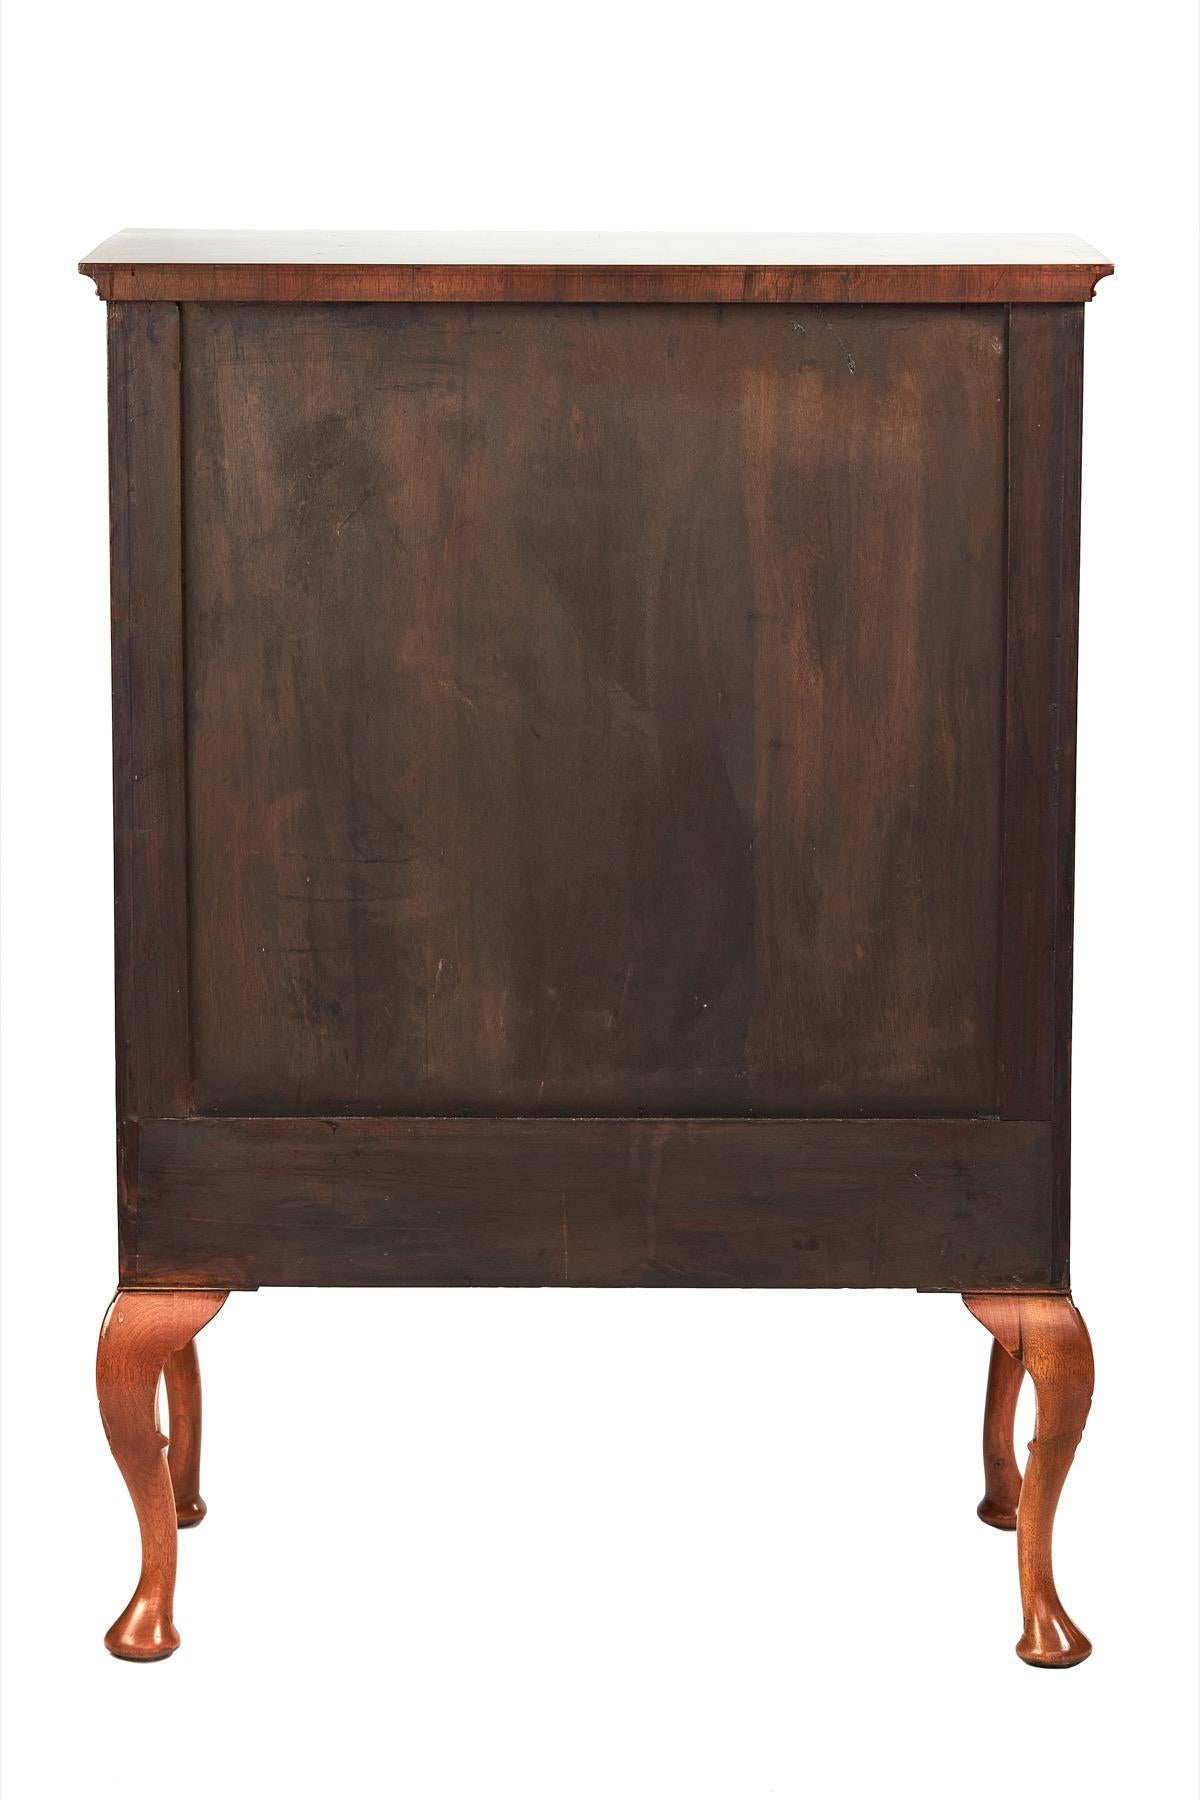 Fine Burr Walnut Georgian  Revival 4 drawer chest circa 1920s In Good Condition For Sale In Dereham, GB